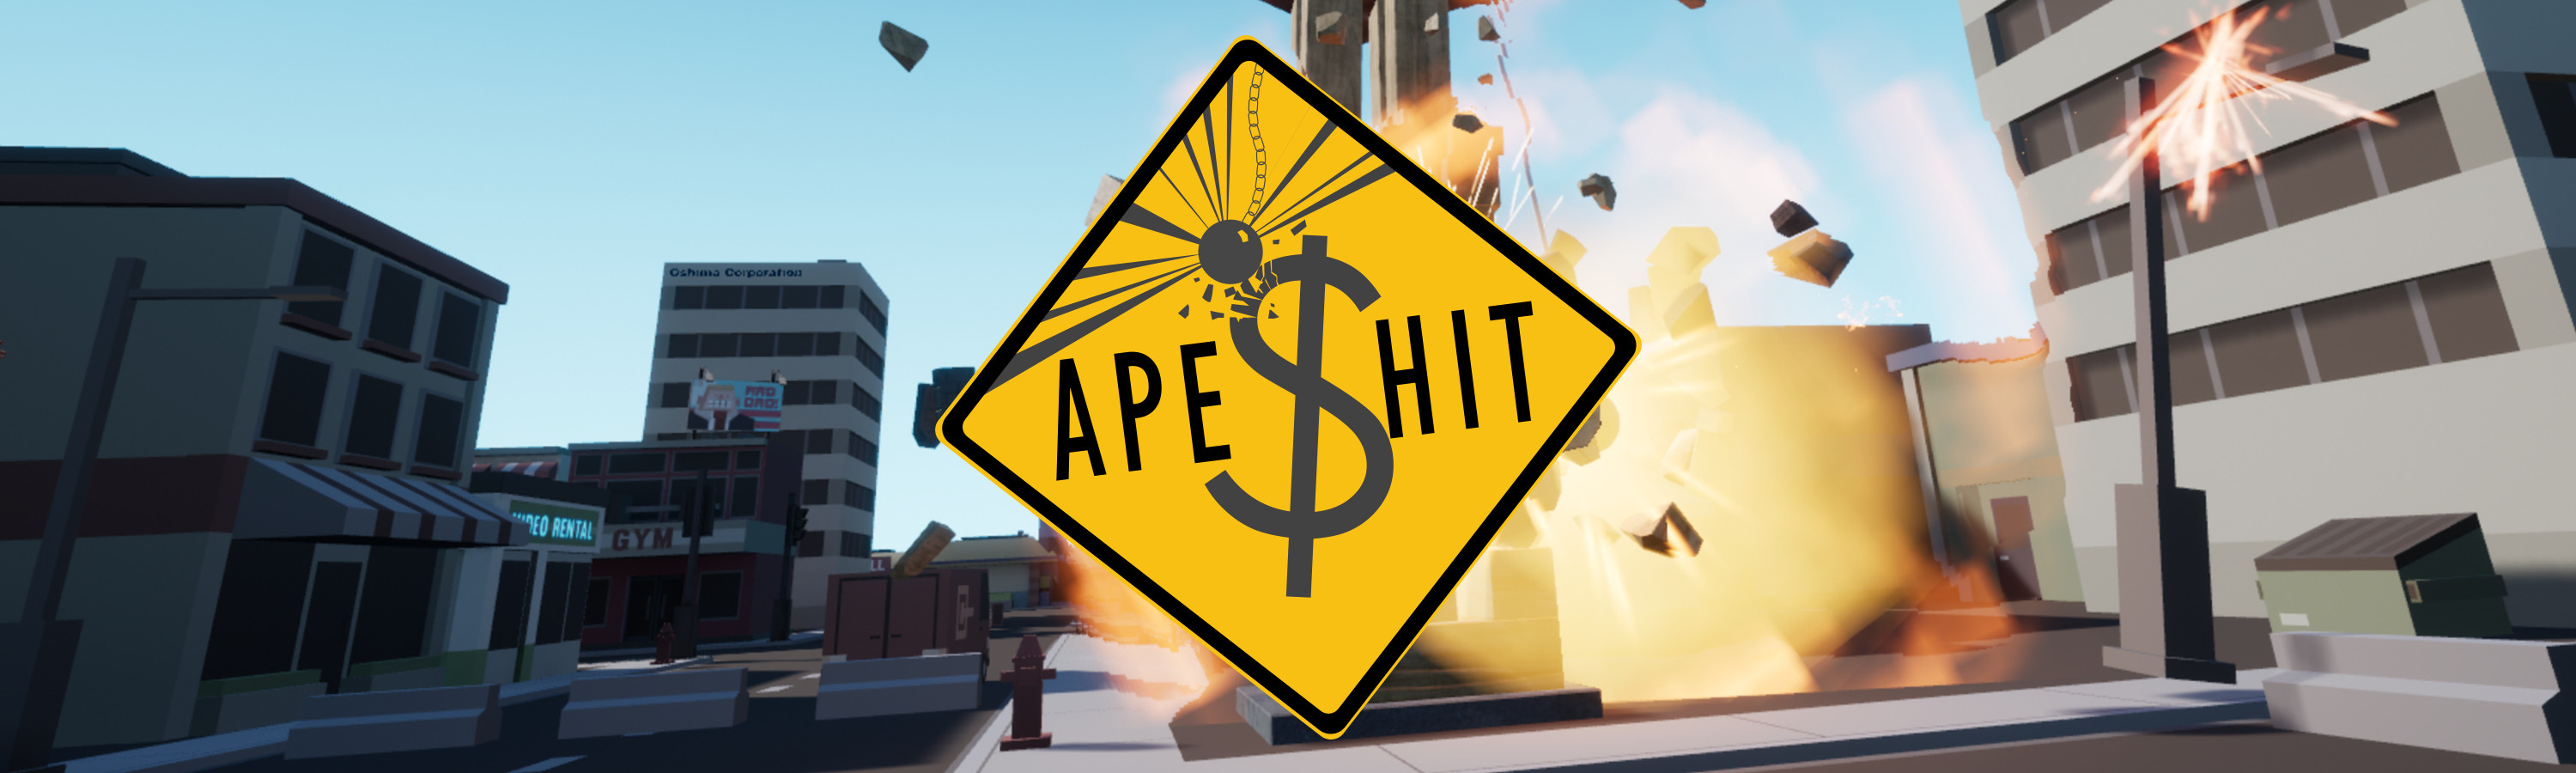 Ape$Hit Hero Shot for Oculus store
Photoshop